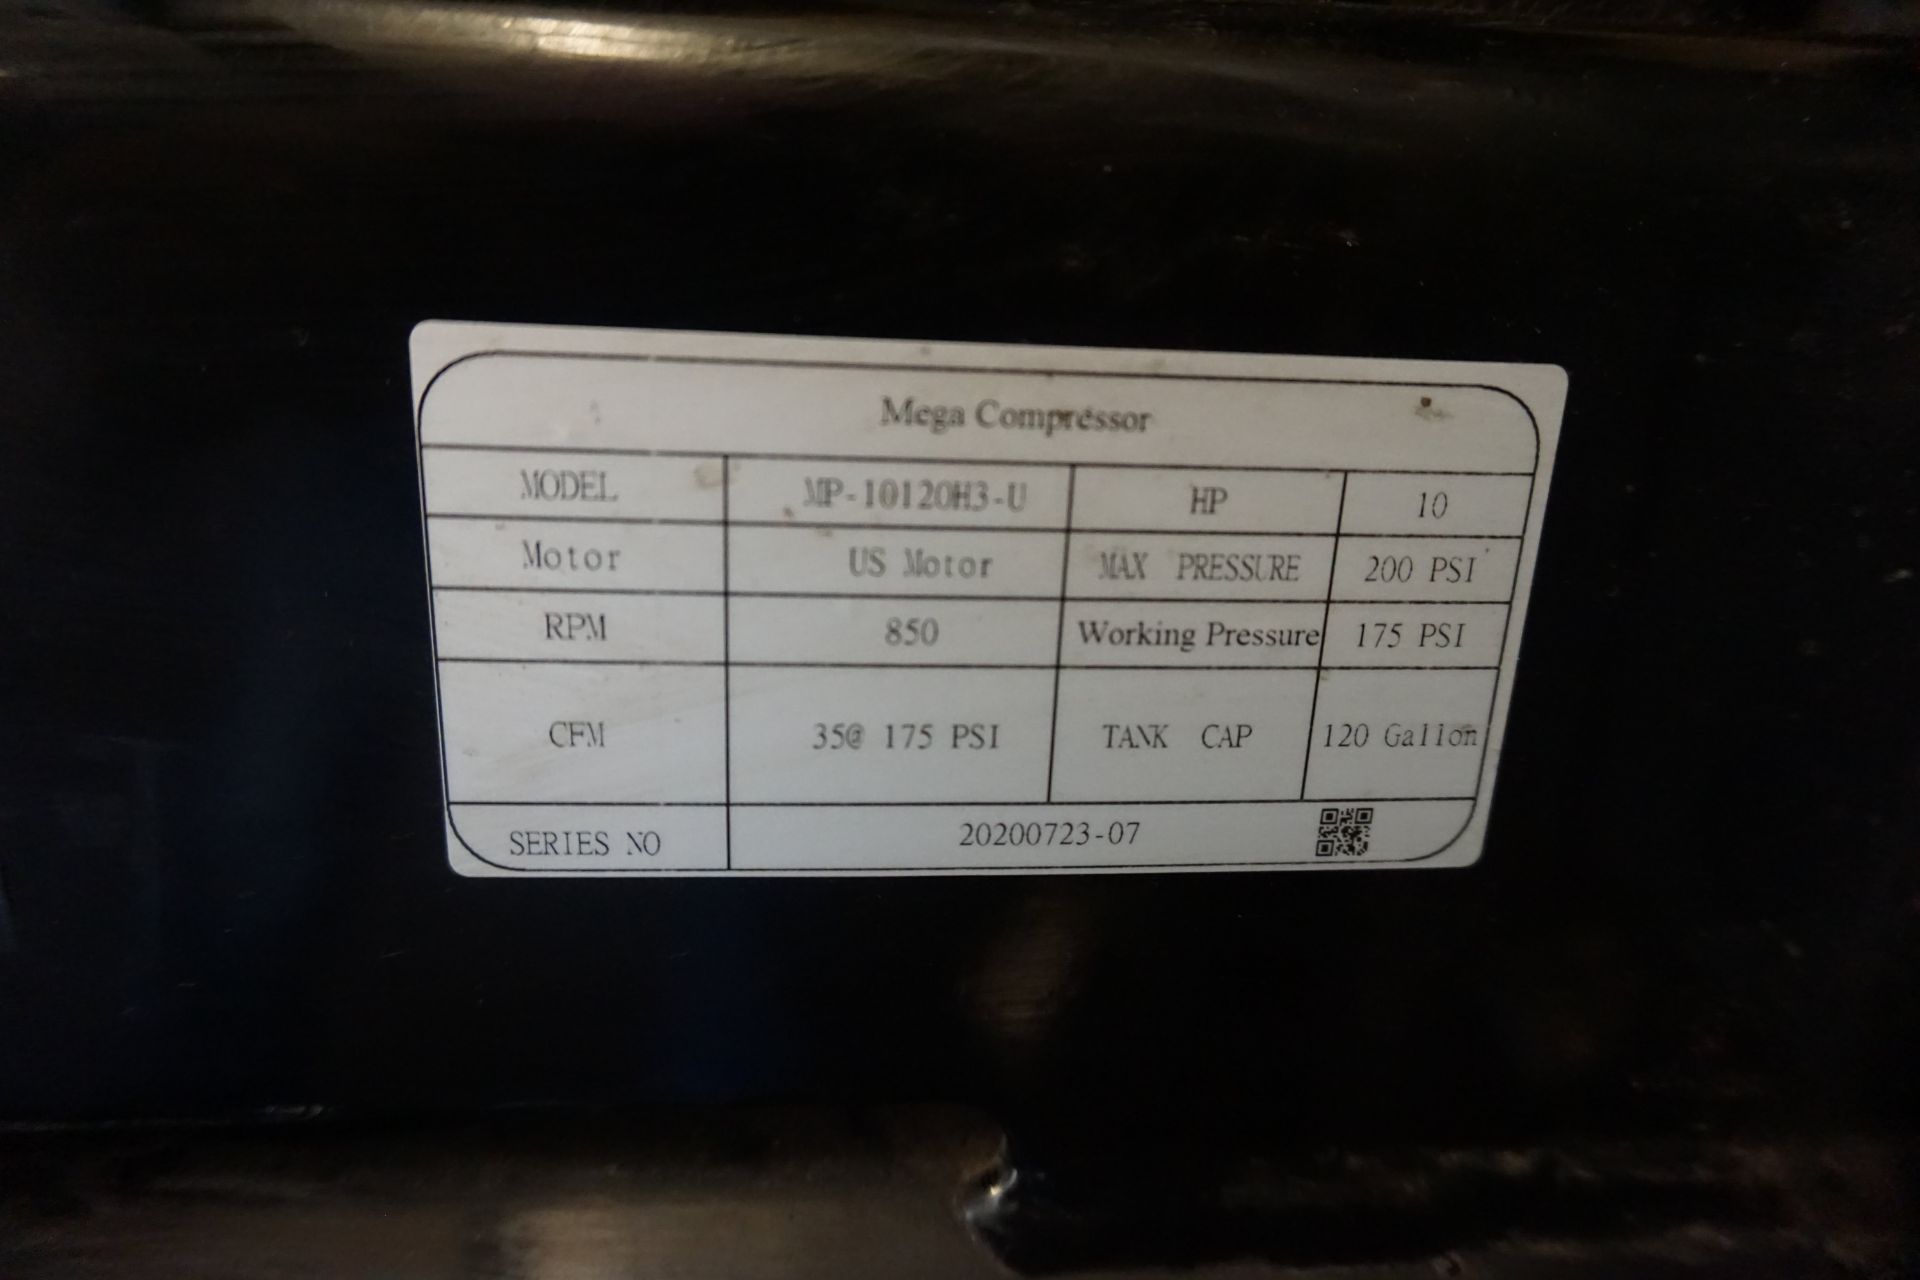 MEGA 10 HP AIR COMPRESOR MDL: MP=10120H3-U, APPROX 200 GAL TANK - Image 2 of 5